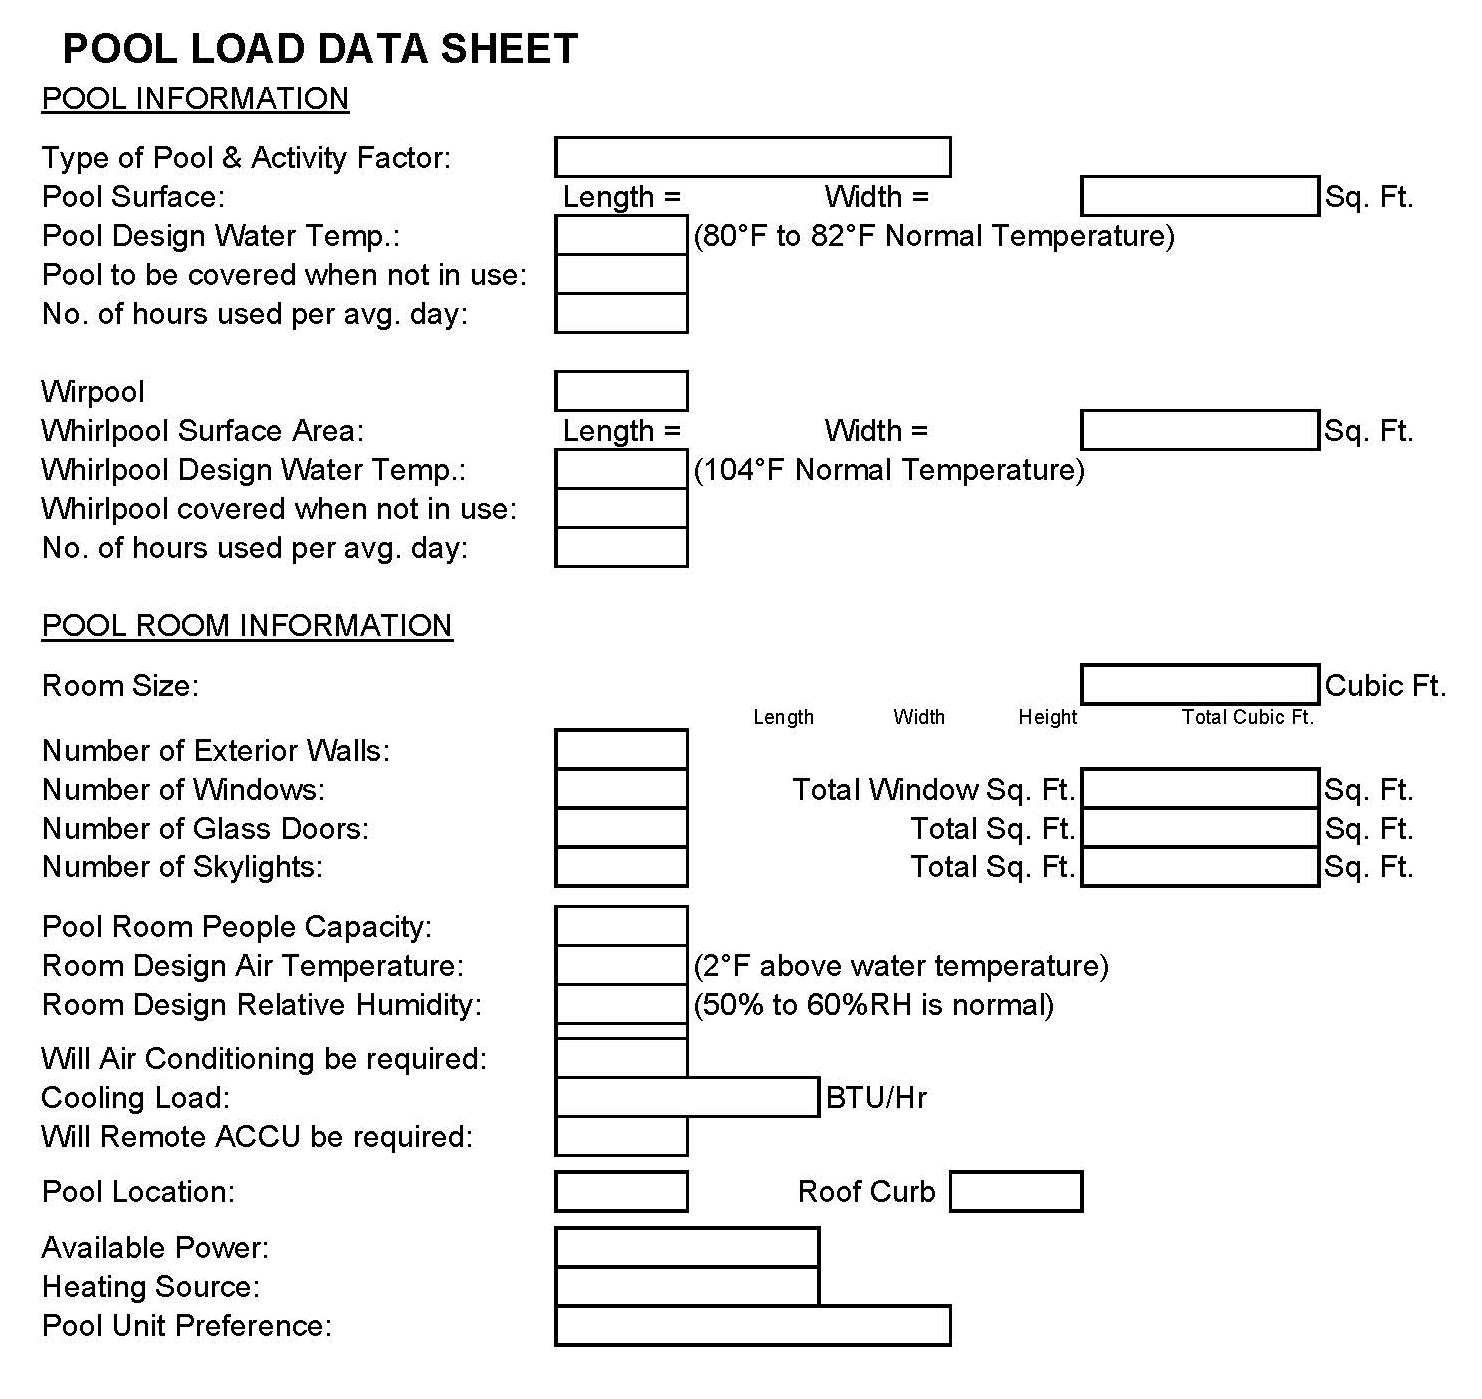 Pool Load Data Sheet